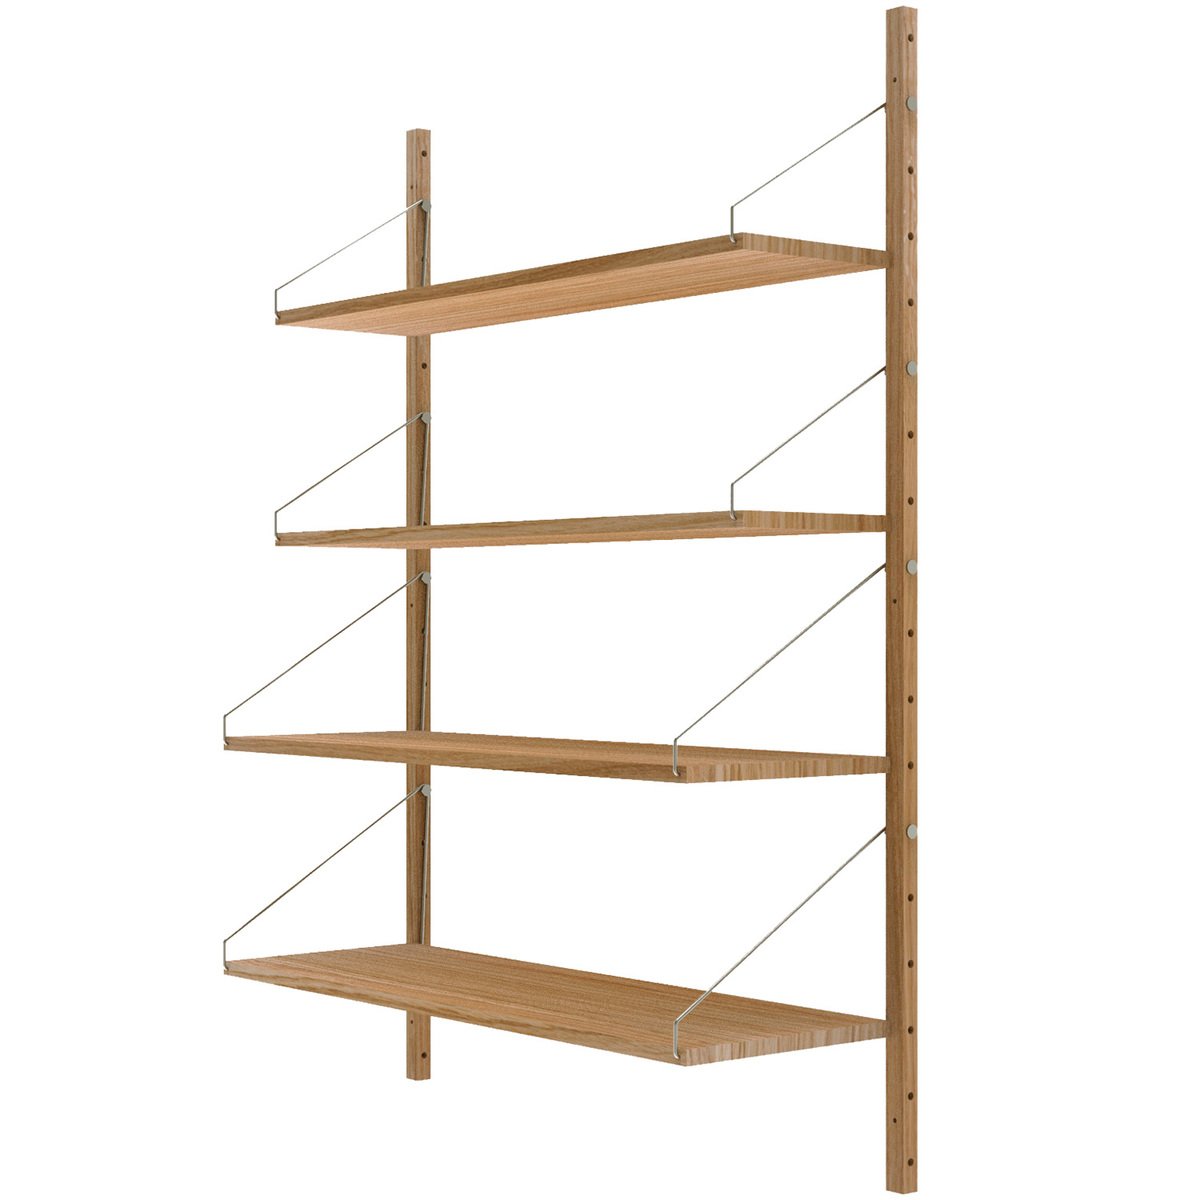 Frama Shelf Library Wall H1148, Style Selections Wood Wall Mounted Shelving